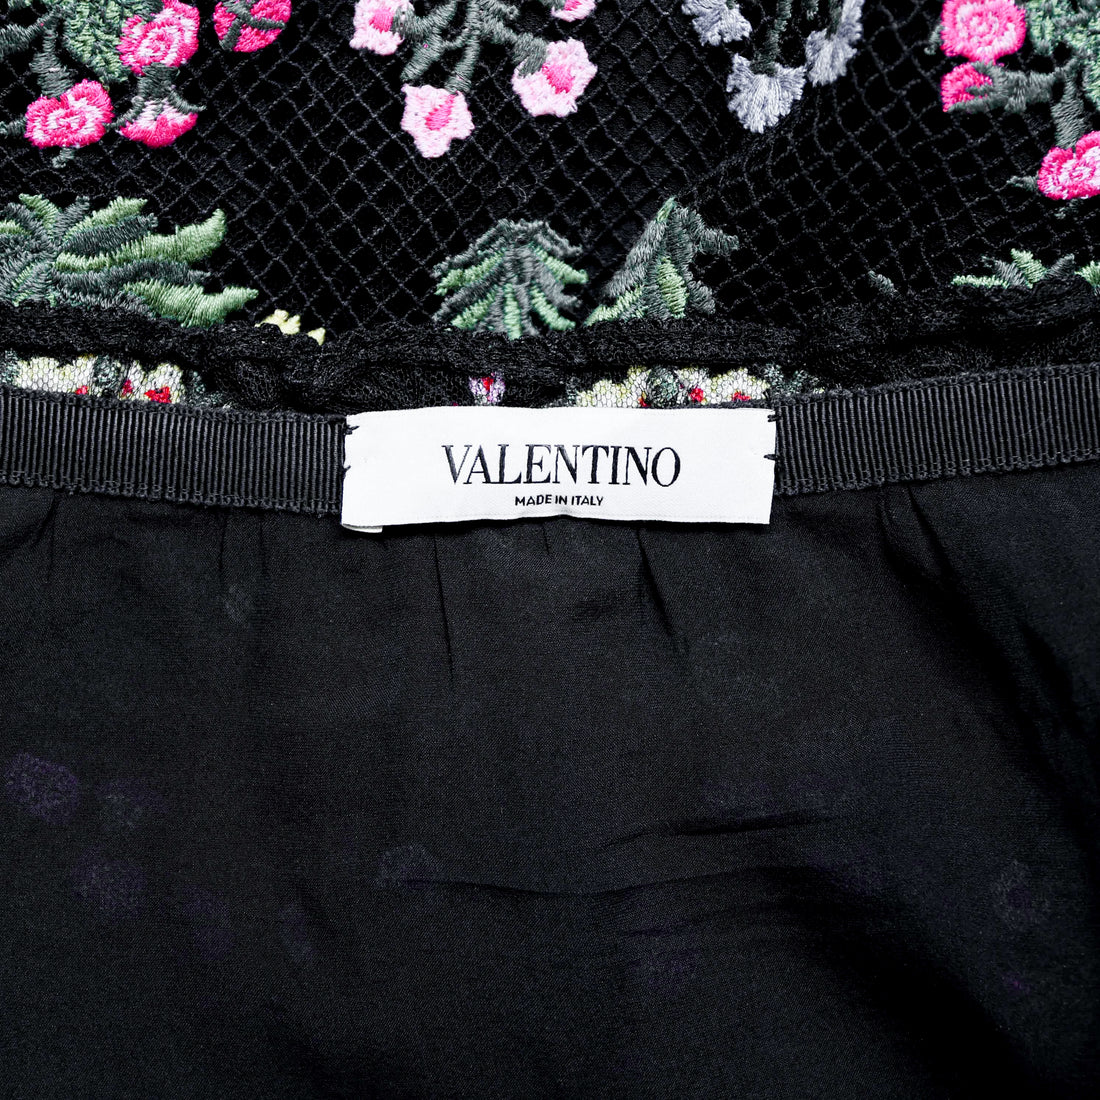 Valentino Lavishly embroidered mini skirt in mesh design